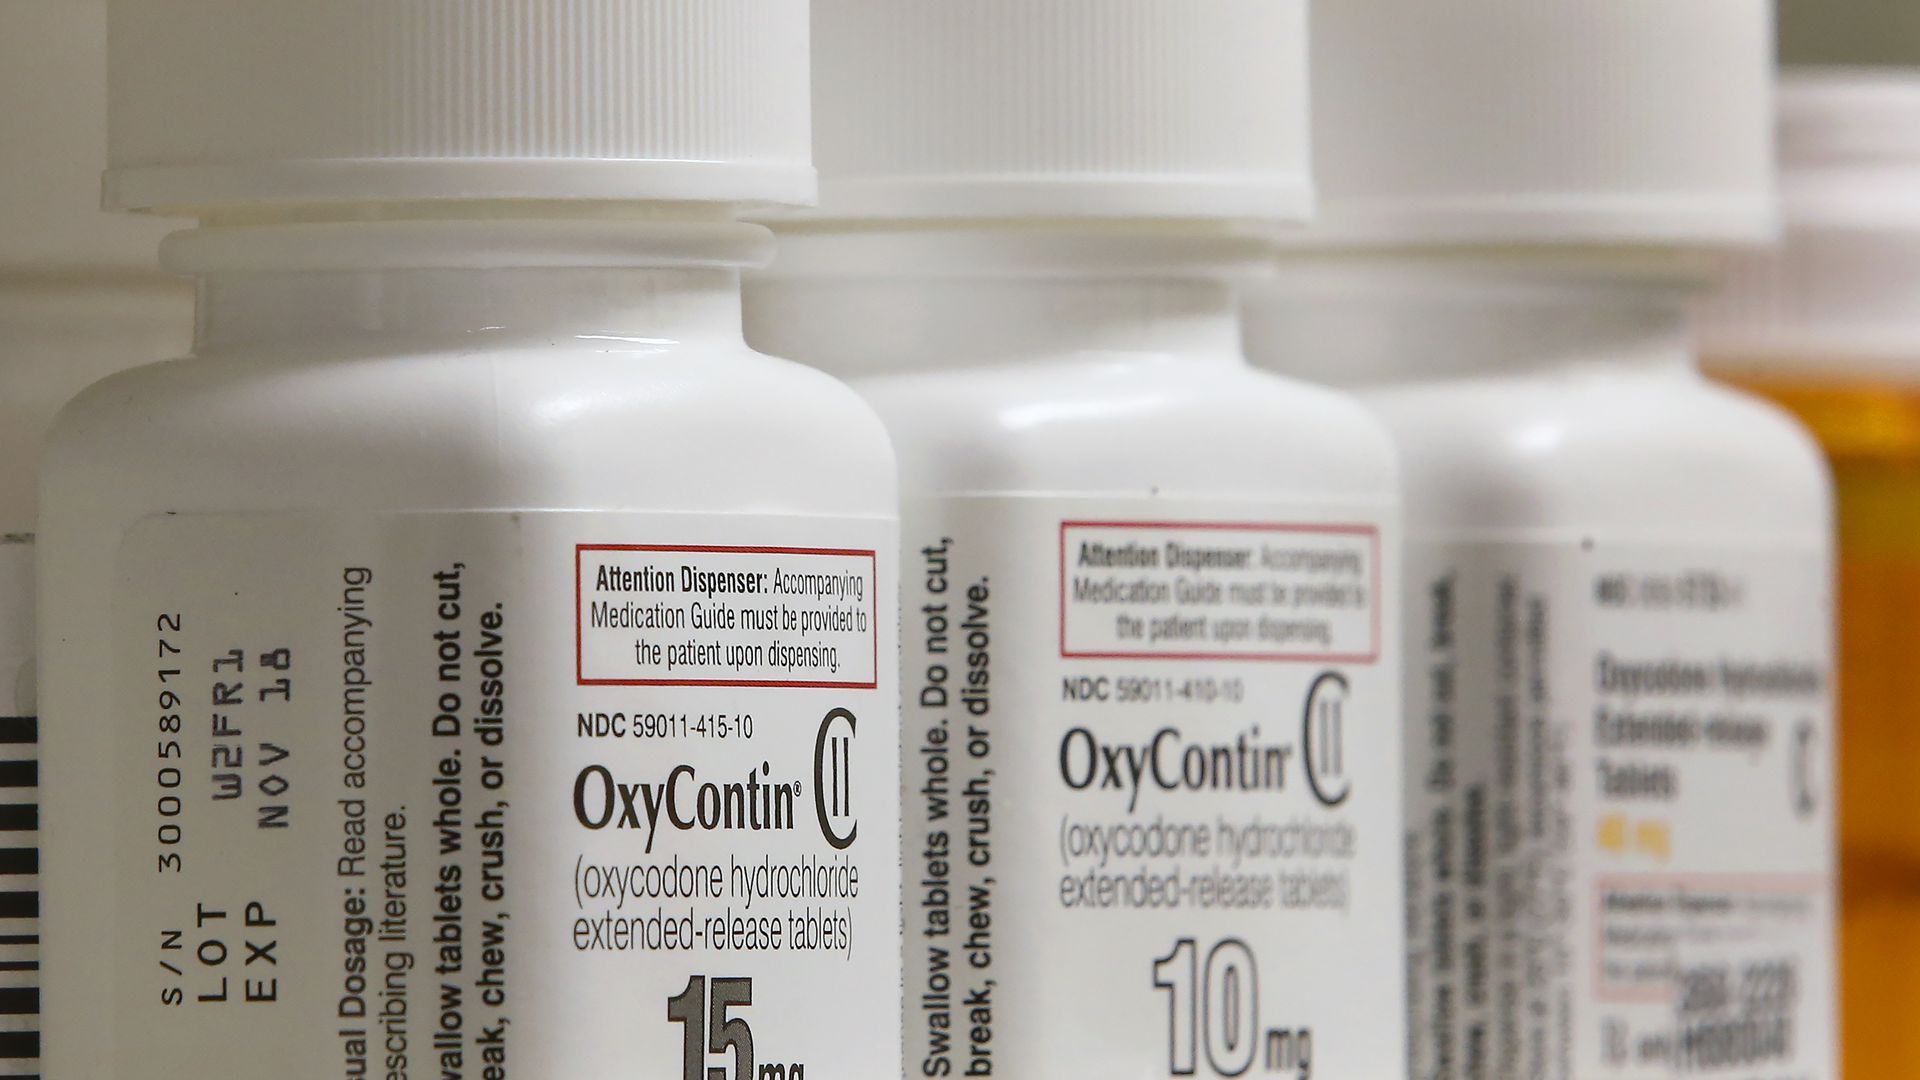 Bottles of Purdue Pharma OxyContin medication.